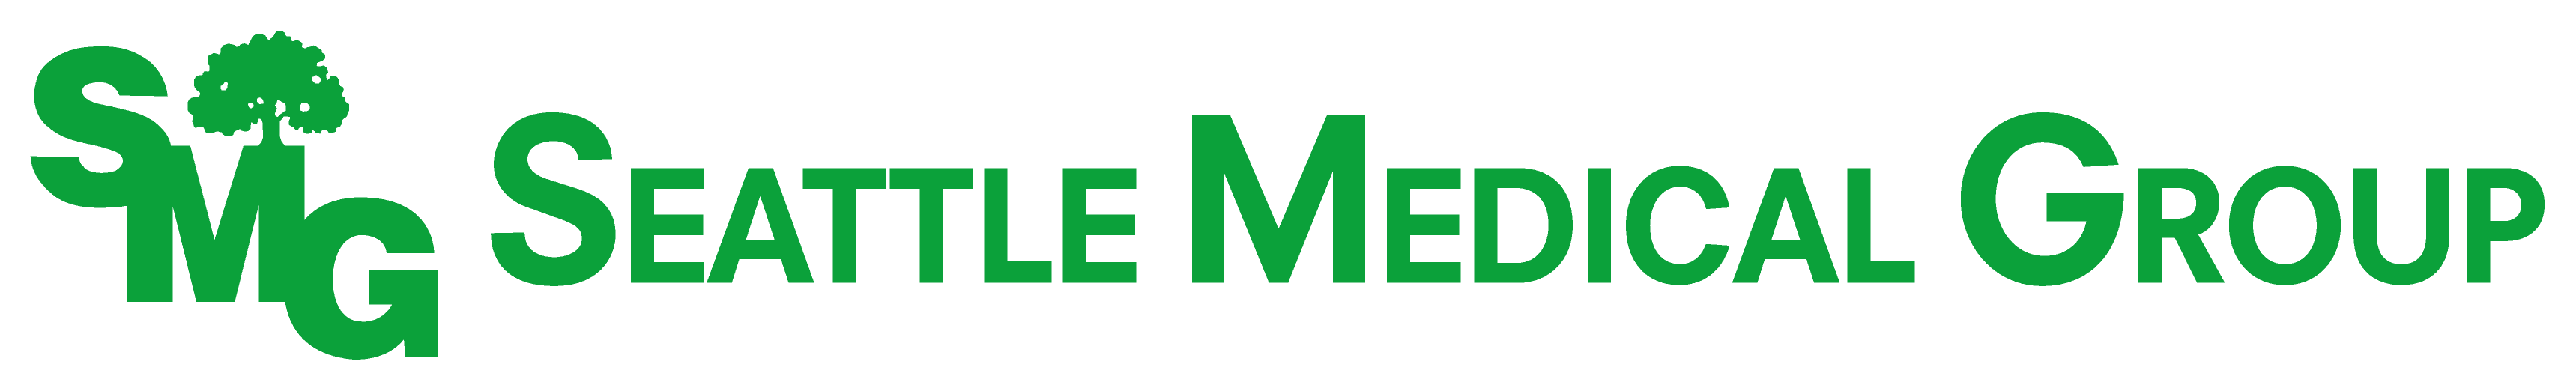 Seattle Medical Group logo